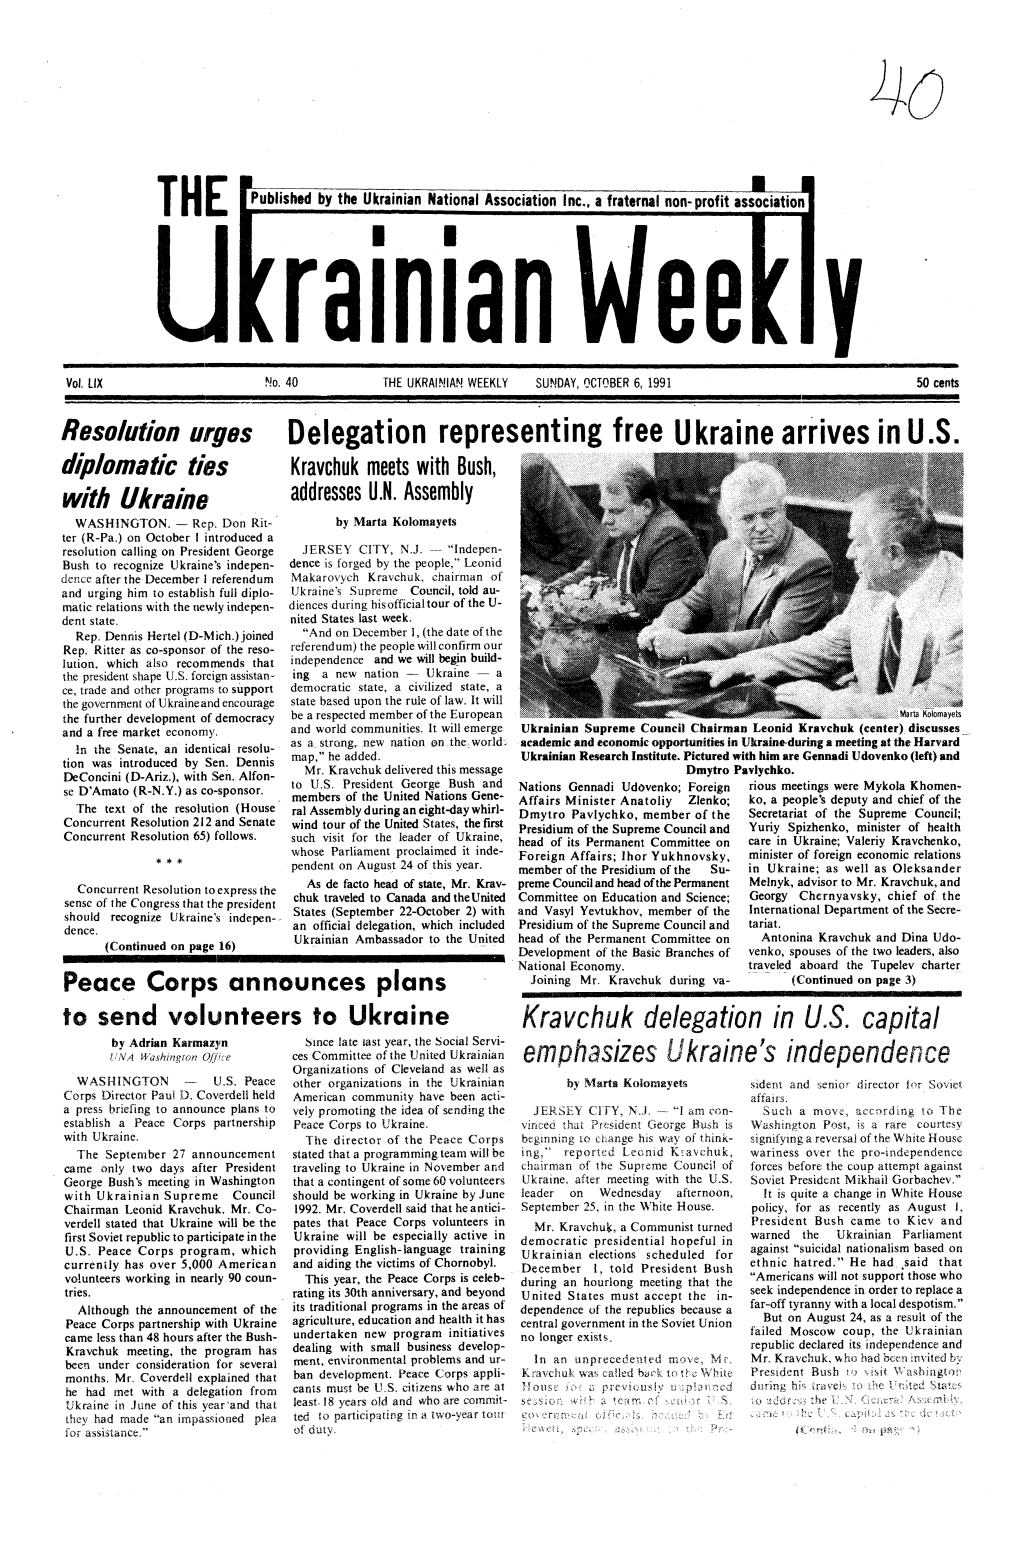 The Ukrainian Weekly 1991, No.40